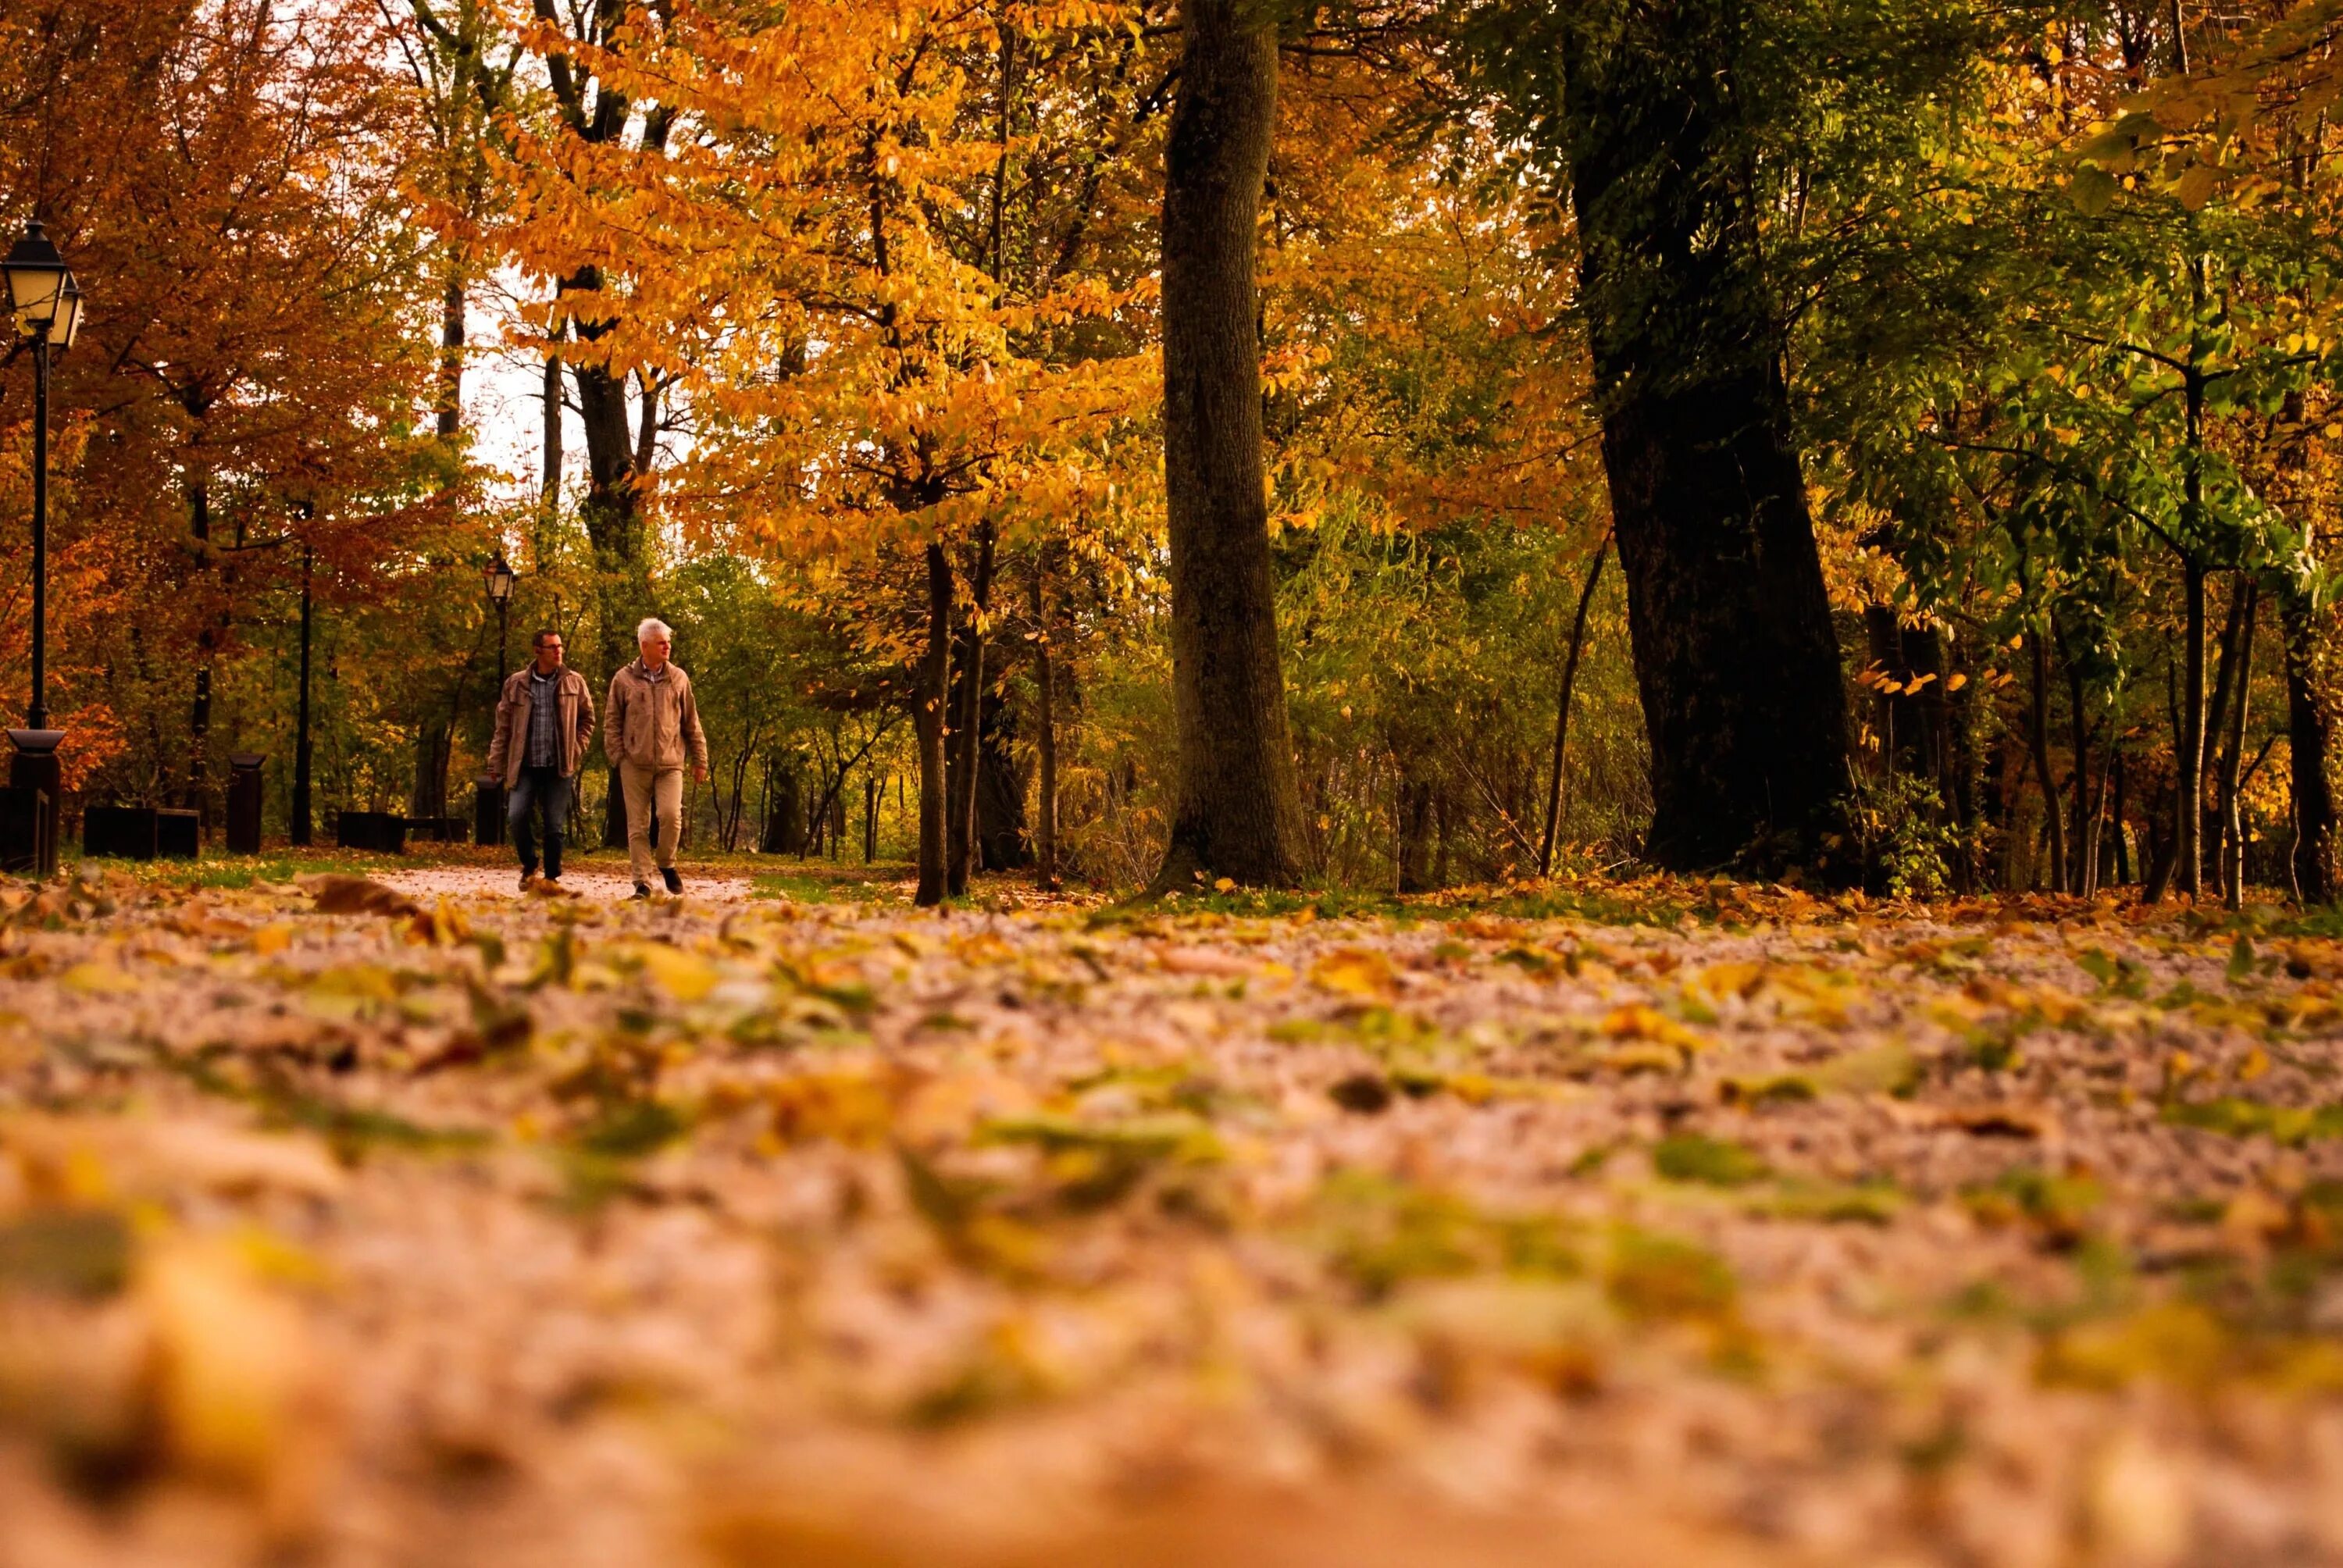 Осень без людей. Осенняя прогулка. Прогулка в осеннем лесу. Осенний лес. Прогулка в осеннем парке.